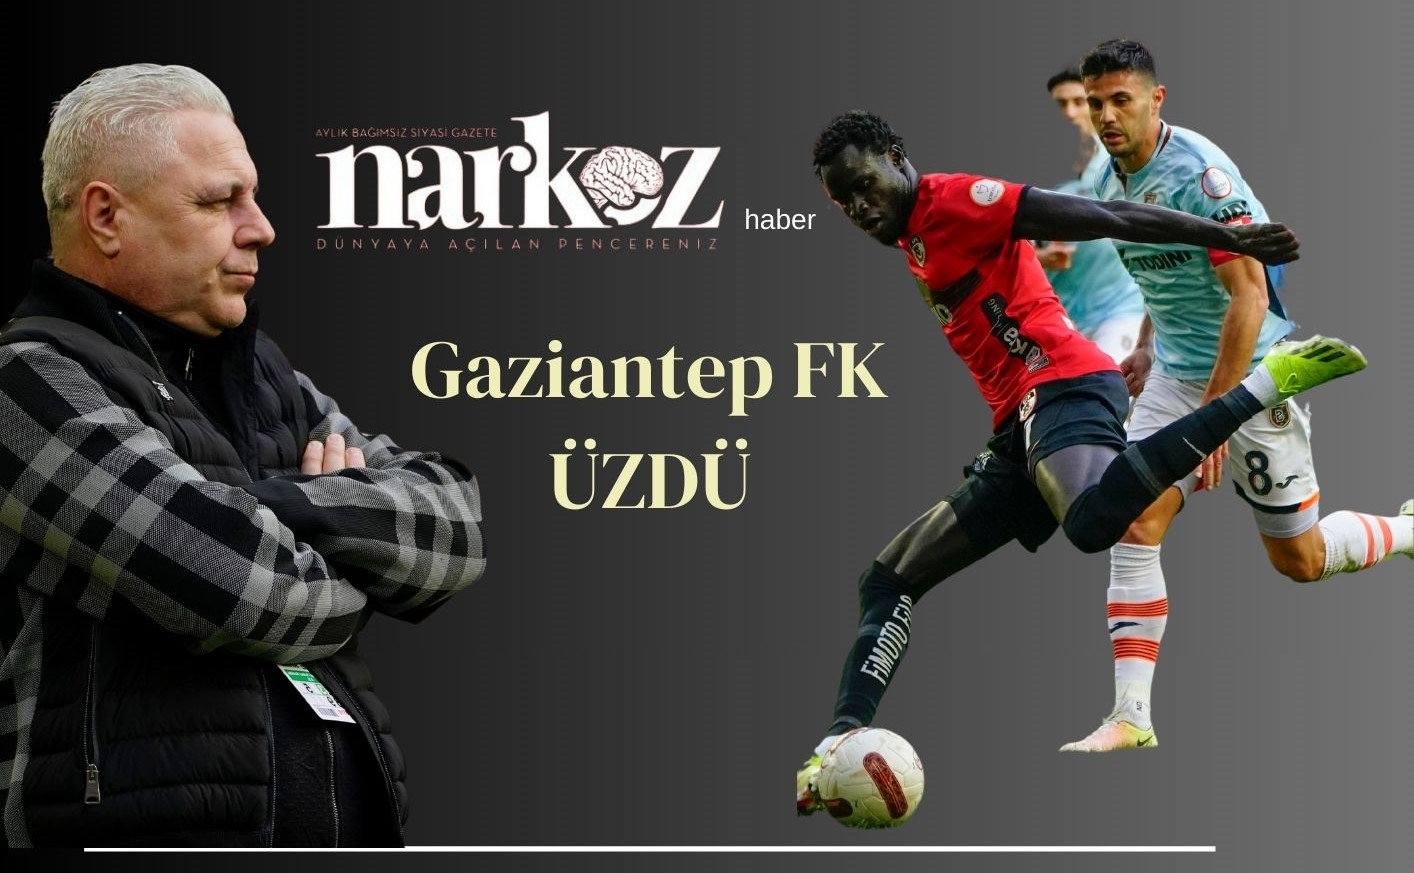 Gaziantep FK üzdü: Gaziantep FK 0 - 2 Başakşehir